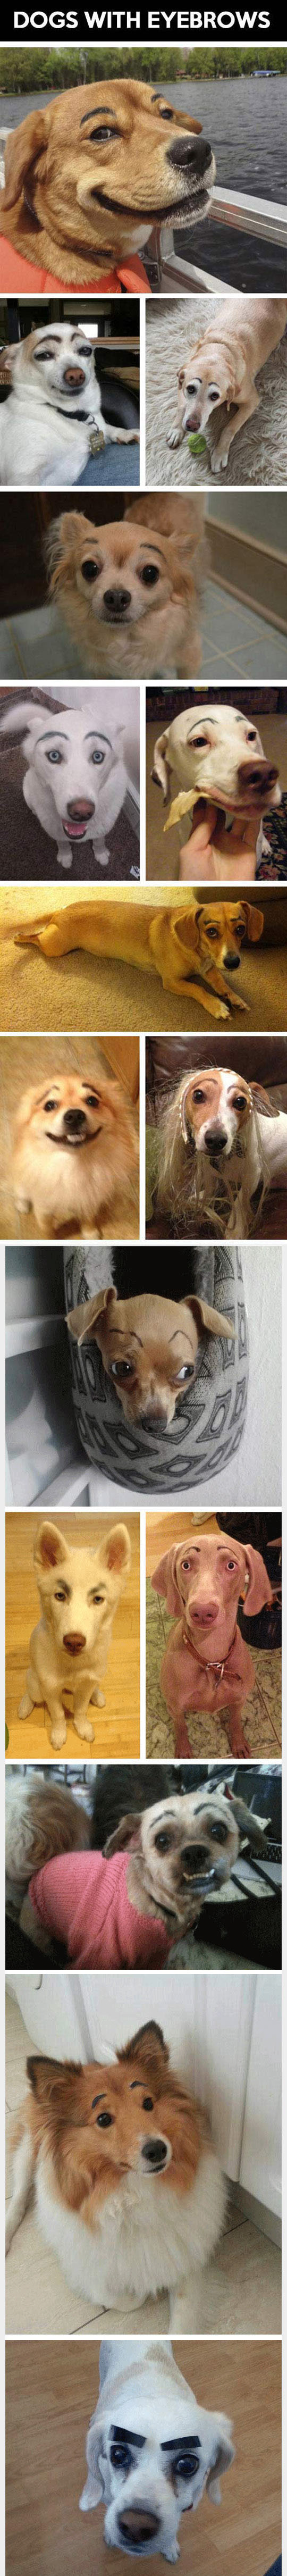 If Dogs Had Eyebrows